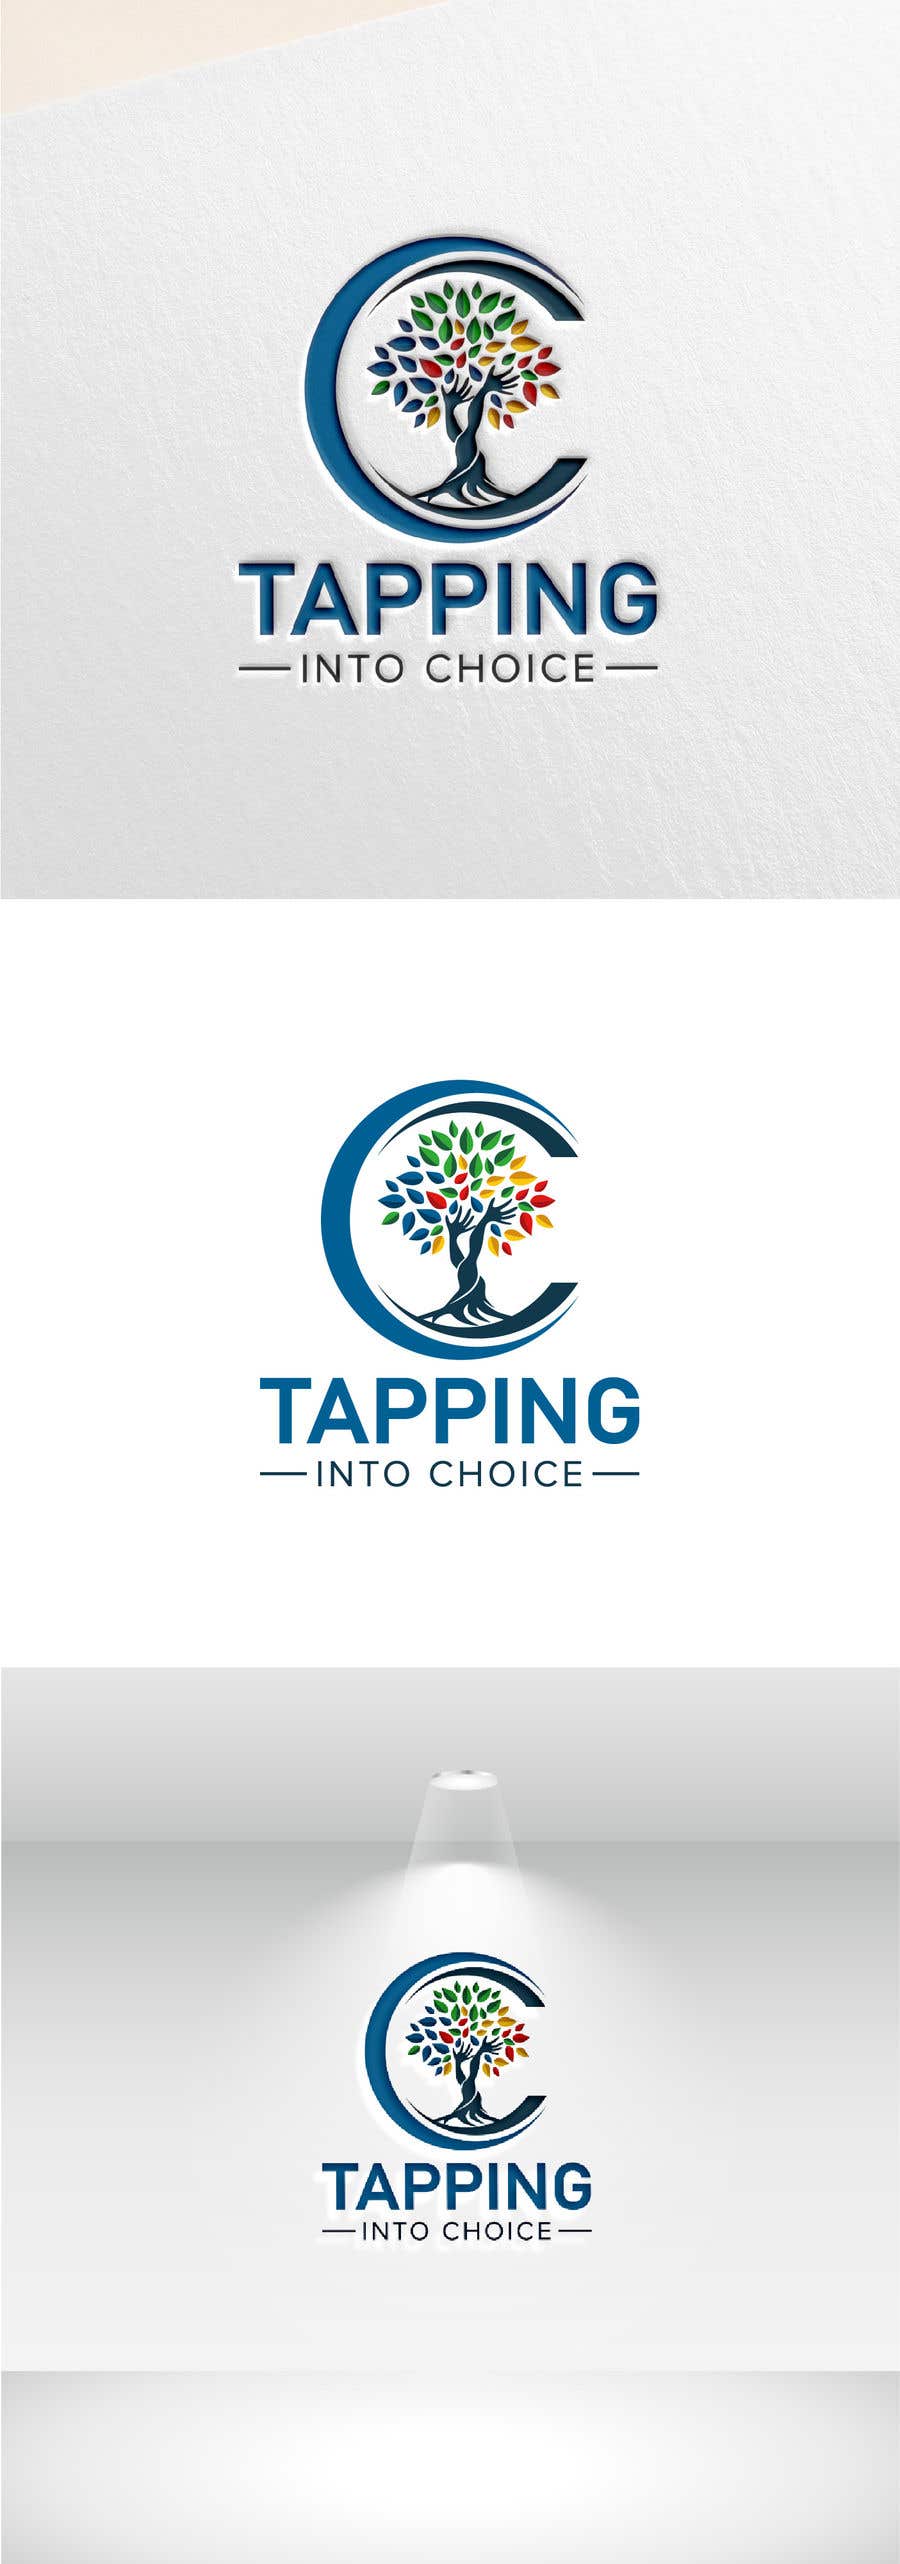 Penyertaan Peraduan #112 untuk                                                 Tapping Into Choice logo
                                            